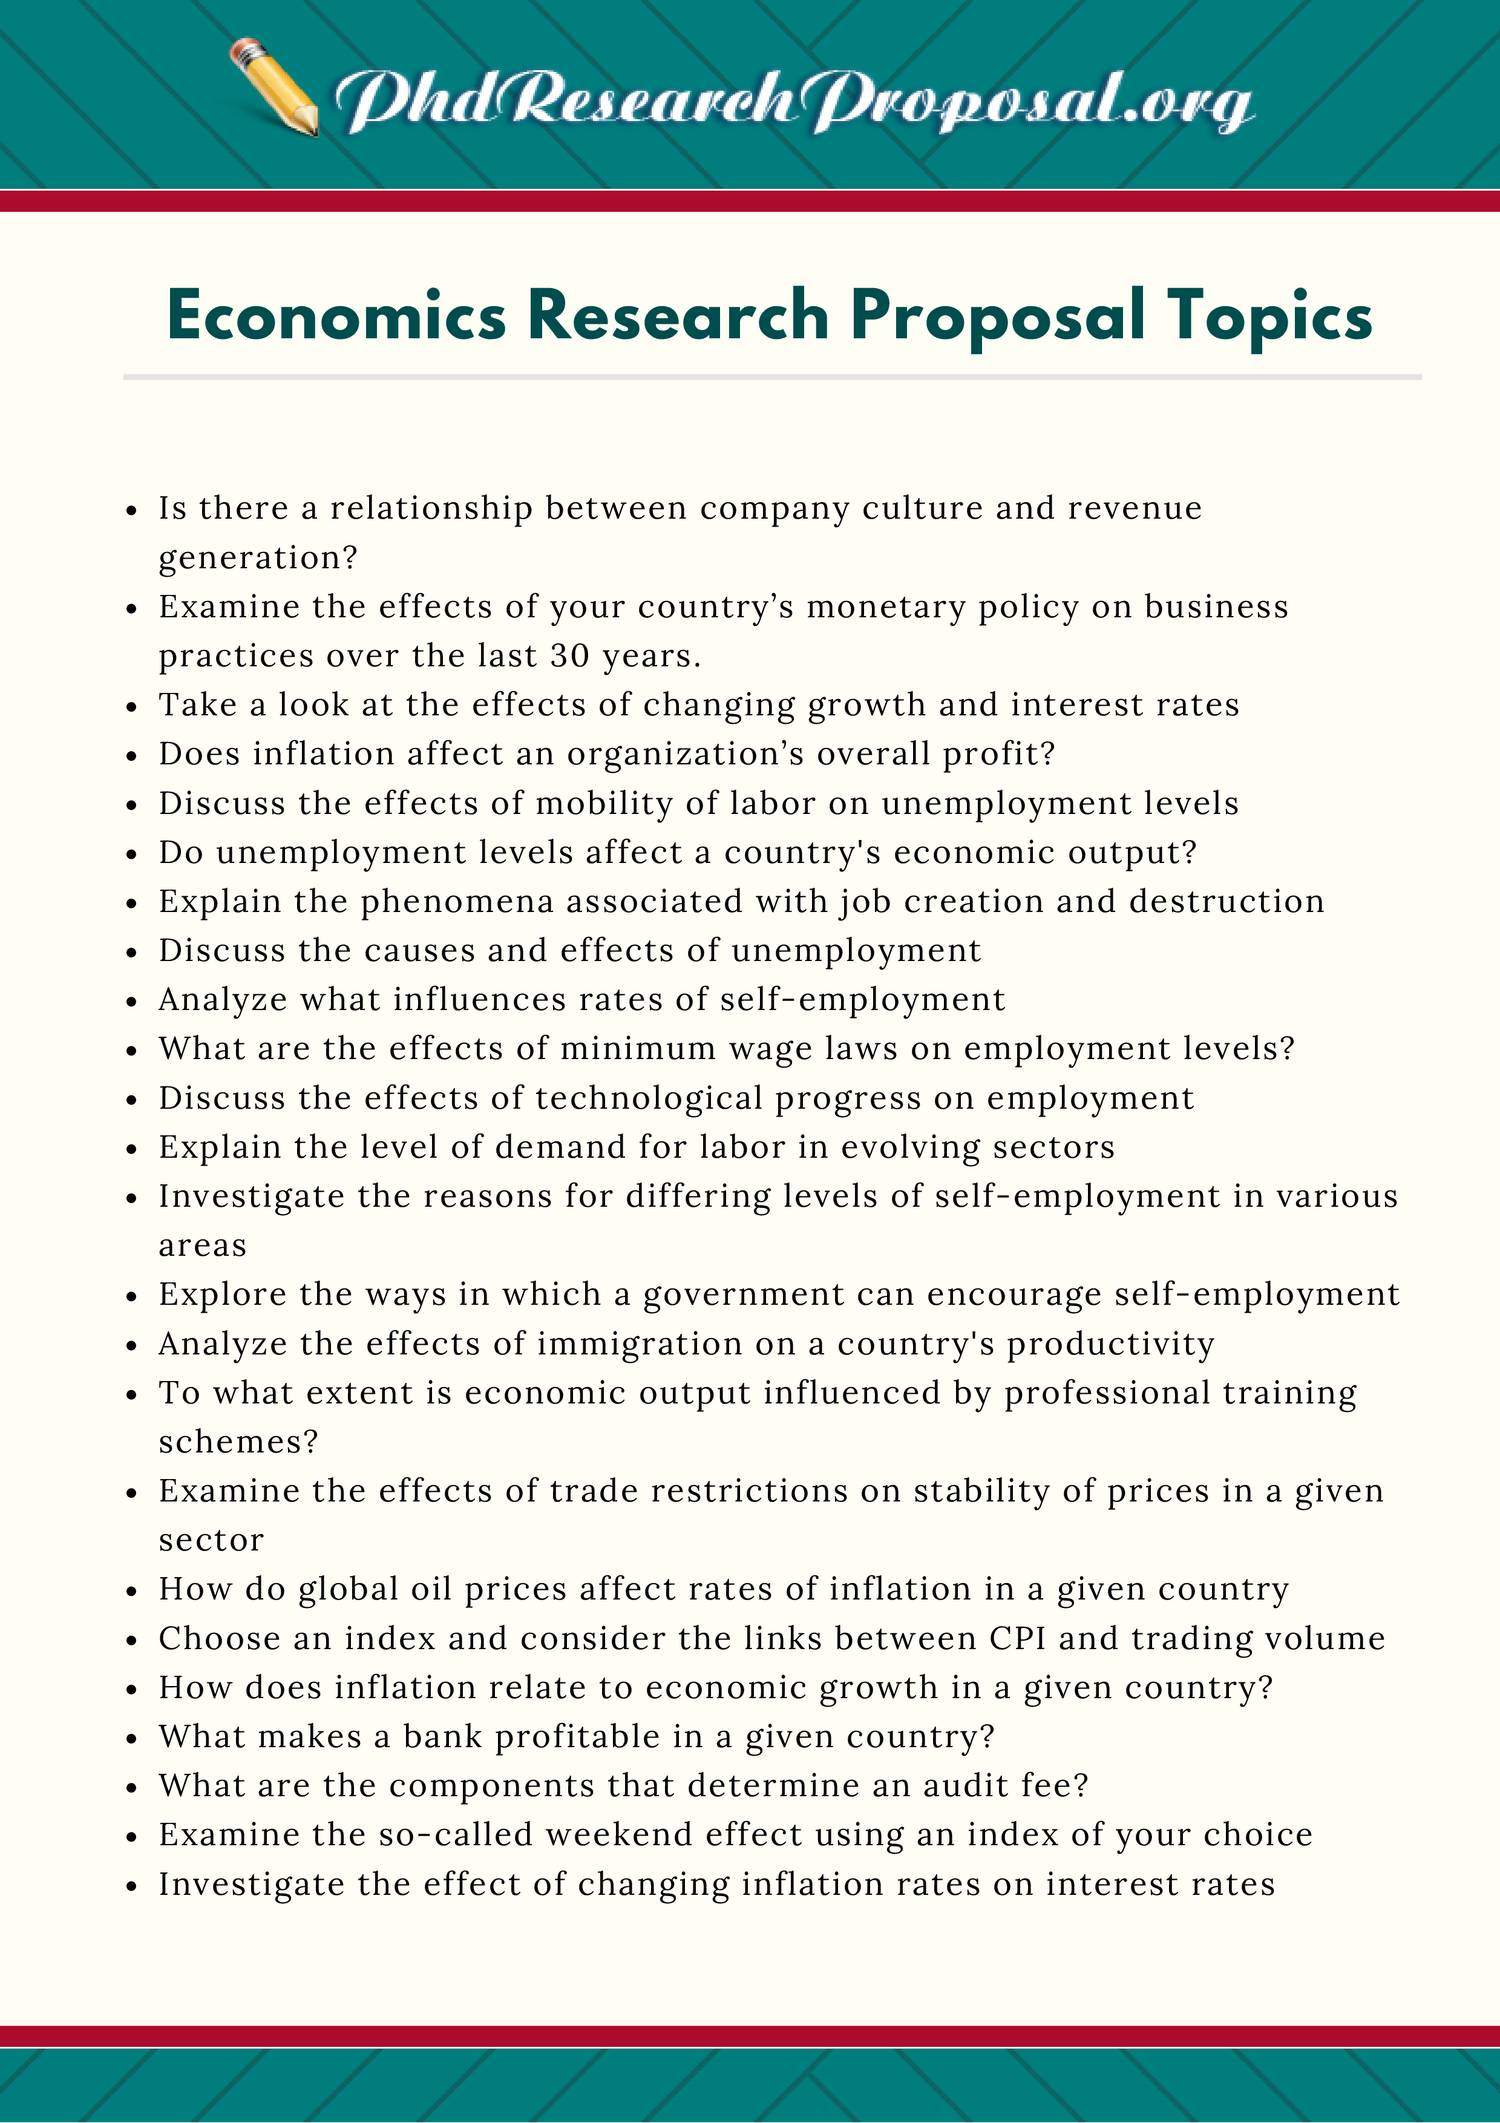 research proposal on economics topics